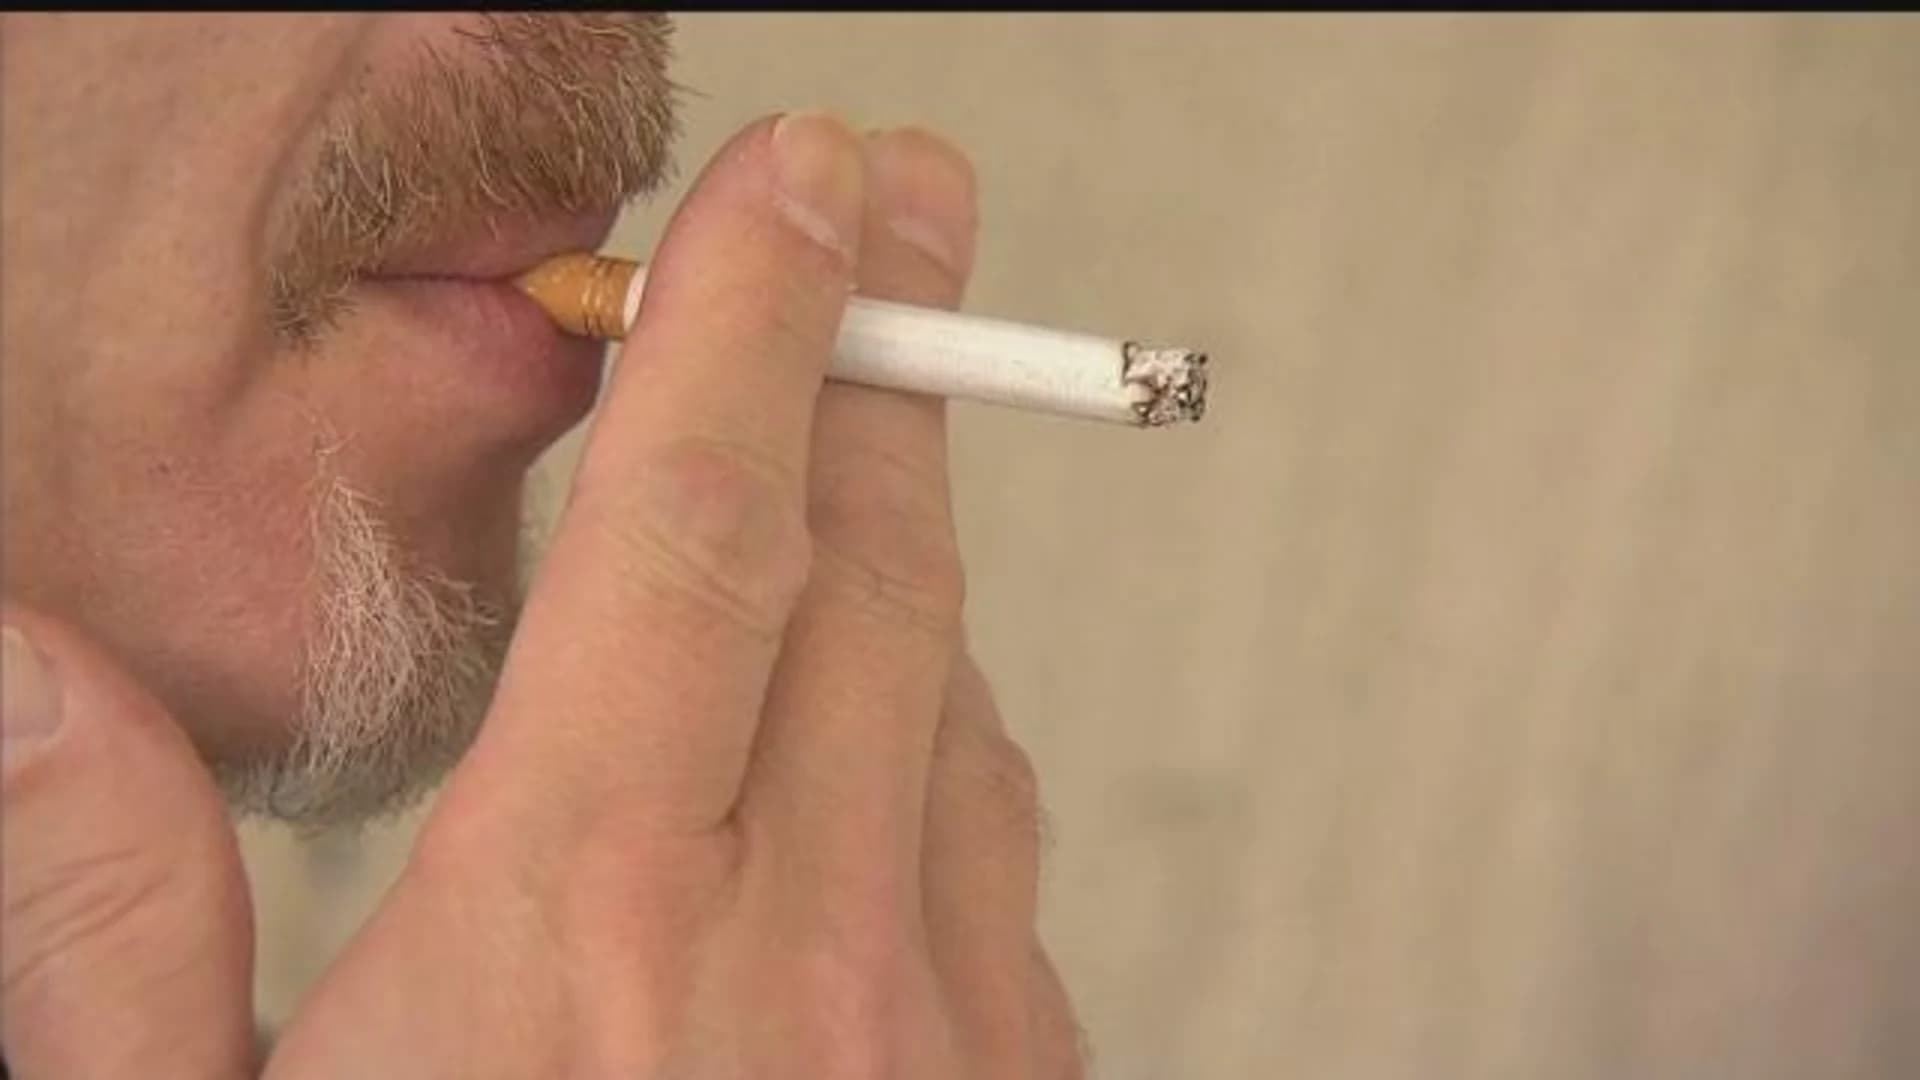 State public health committee OKs raising smoking age